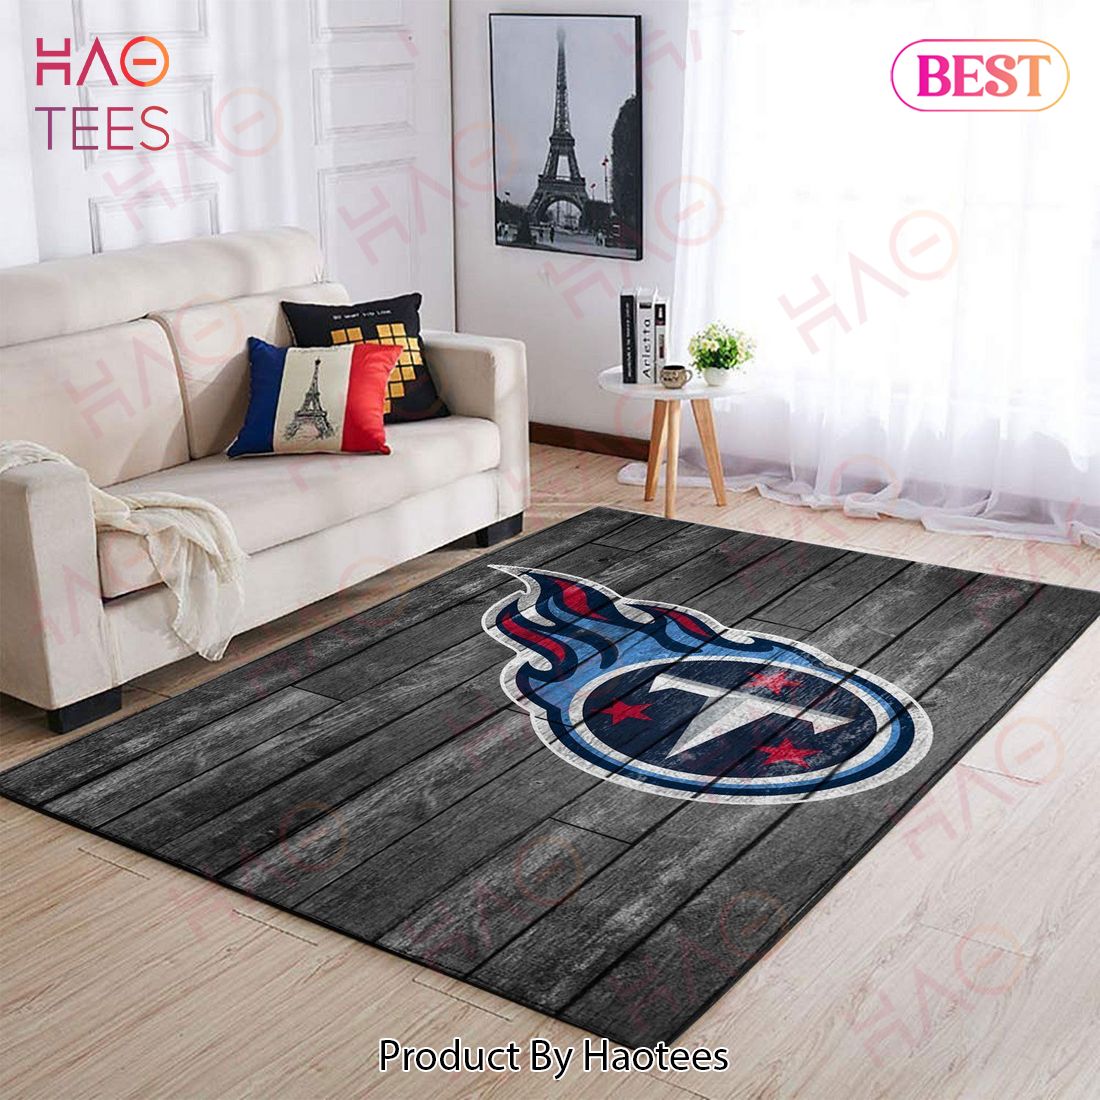 Tennessee Titans Nfl Team Logo Grey Area Rugs Wooden Style Living Room Carpet Sports Rug Regtangle Carpet Floor Decor Home Decor